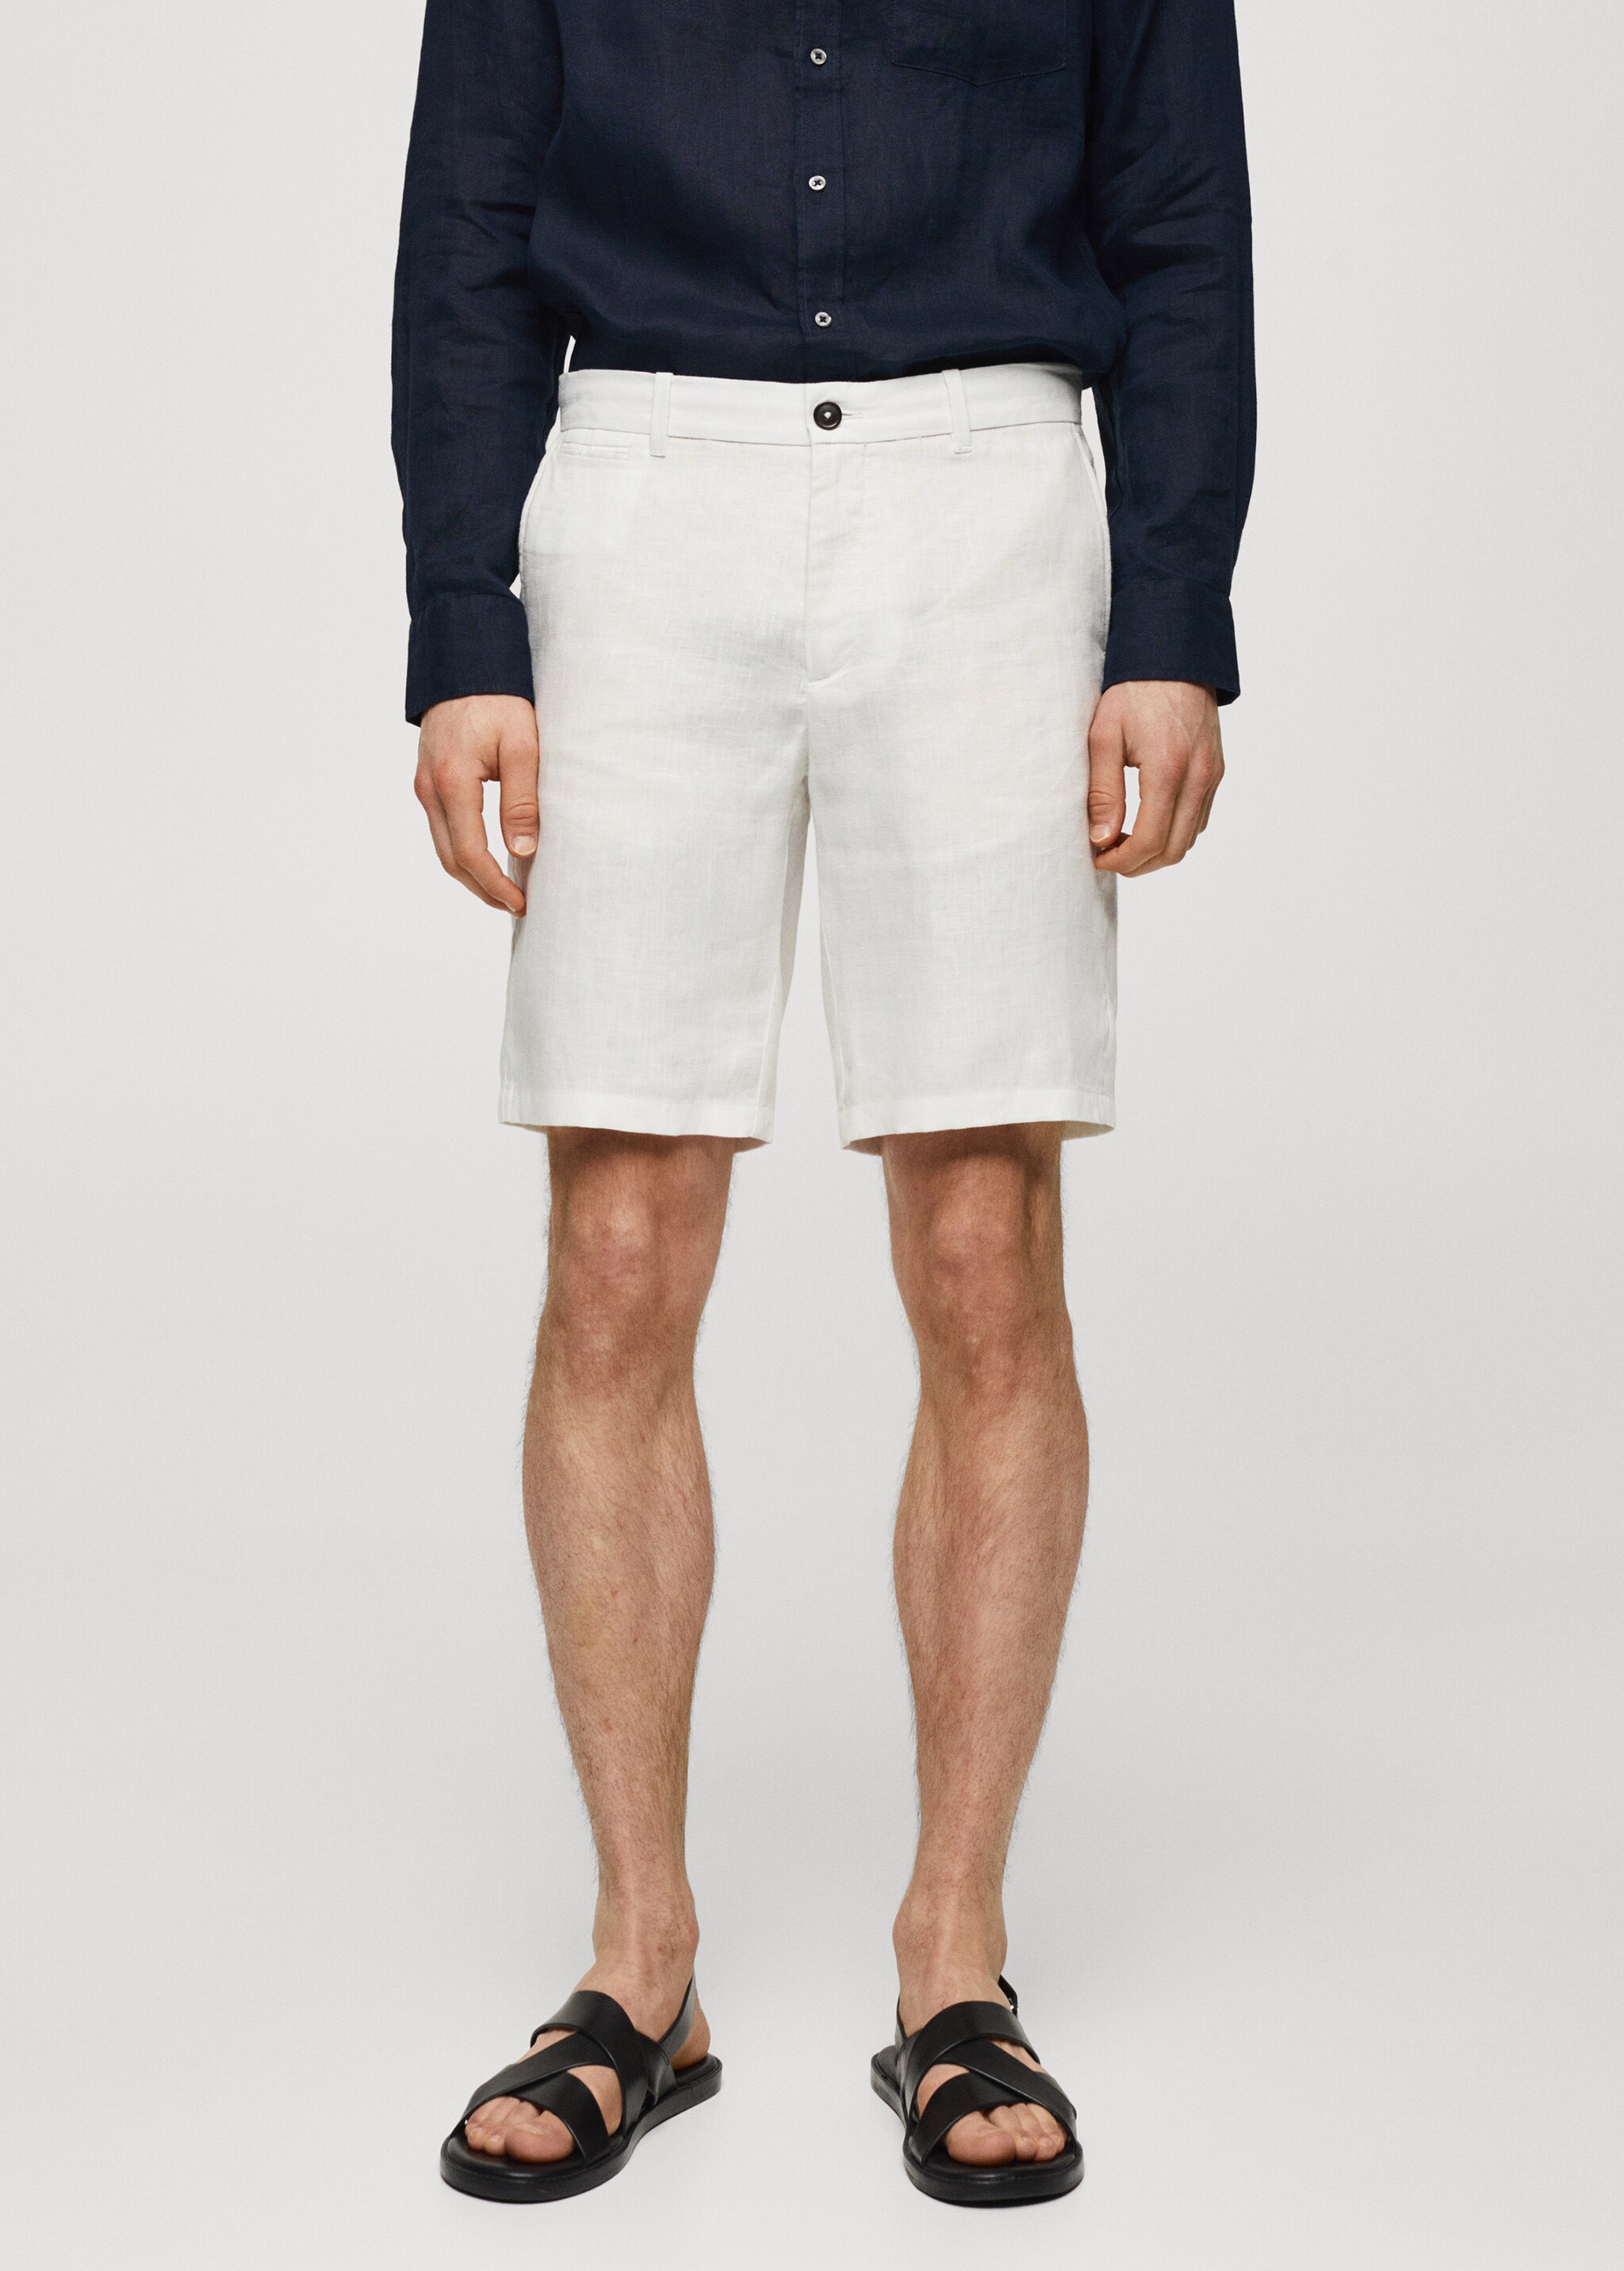 Slim fit 100% linen Bermuda shorts - Medium plane